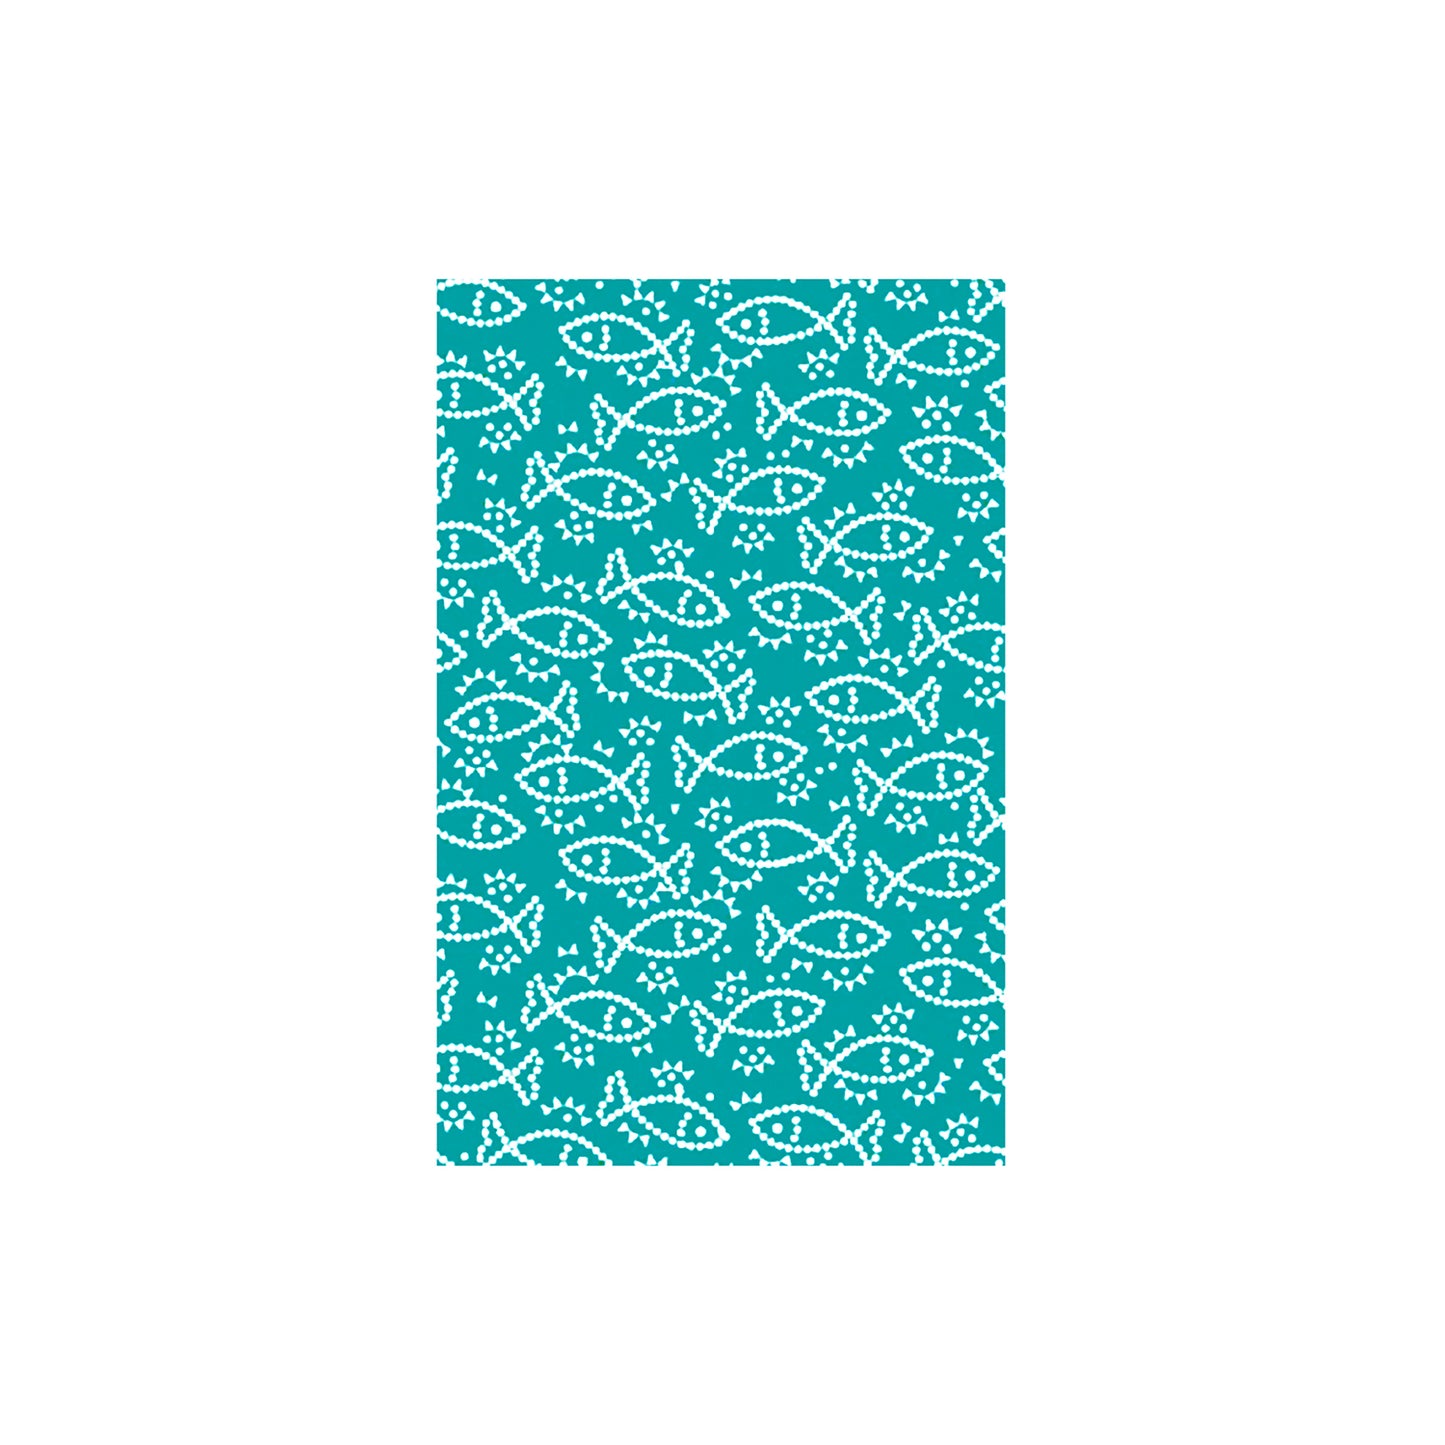 Shunkoen Mamimu Japanese Classic Motifs Mini Memo Notebook | Six Designs Fish on Turquoise